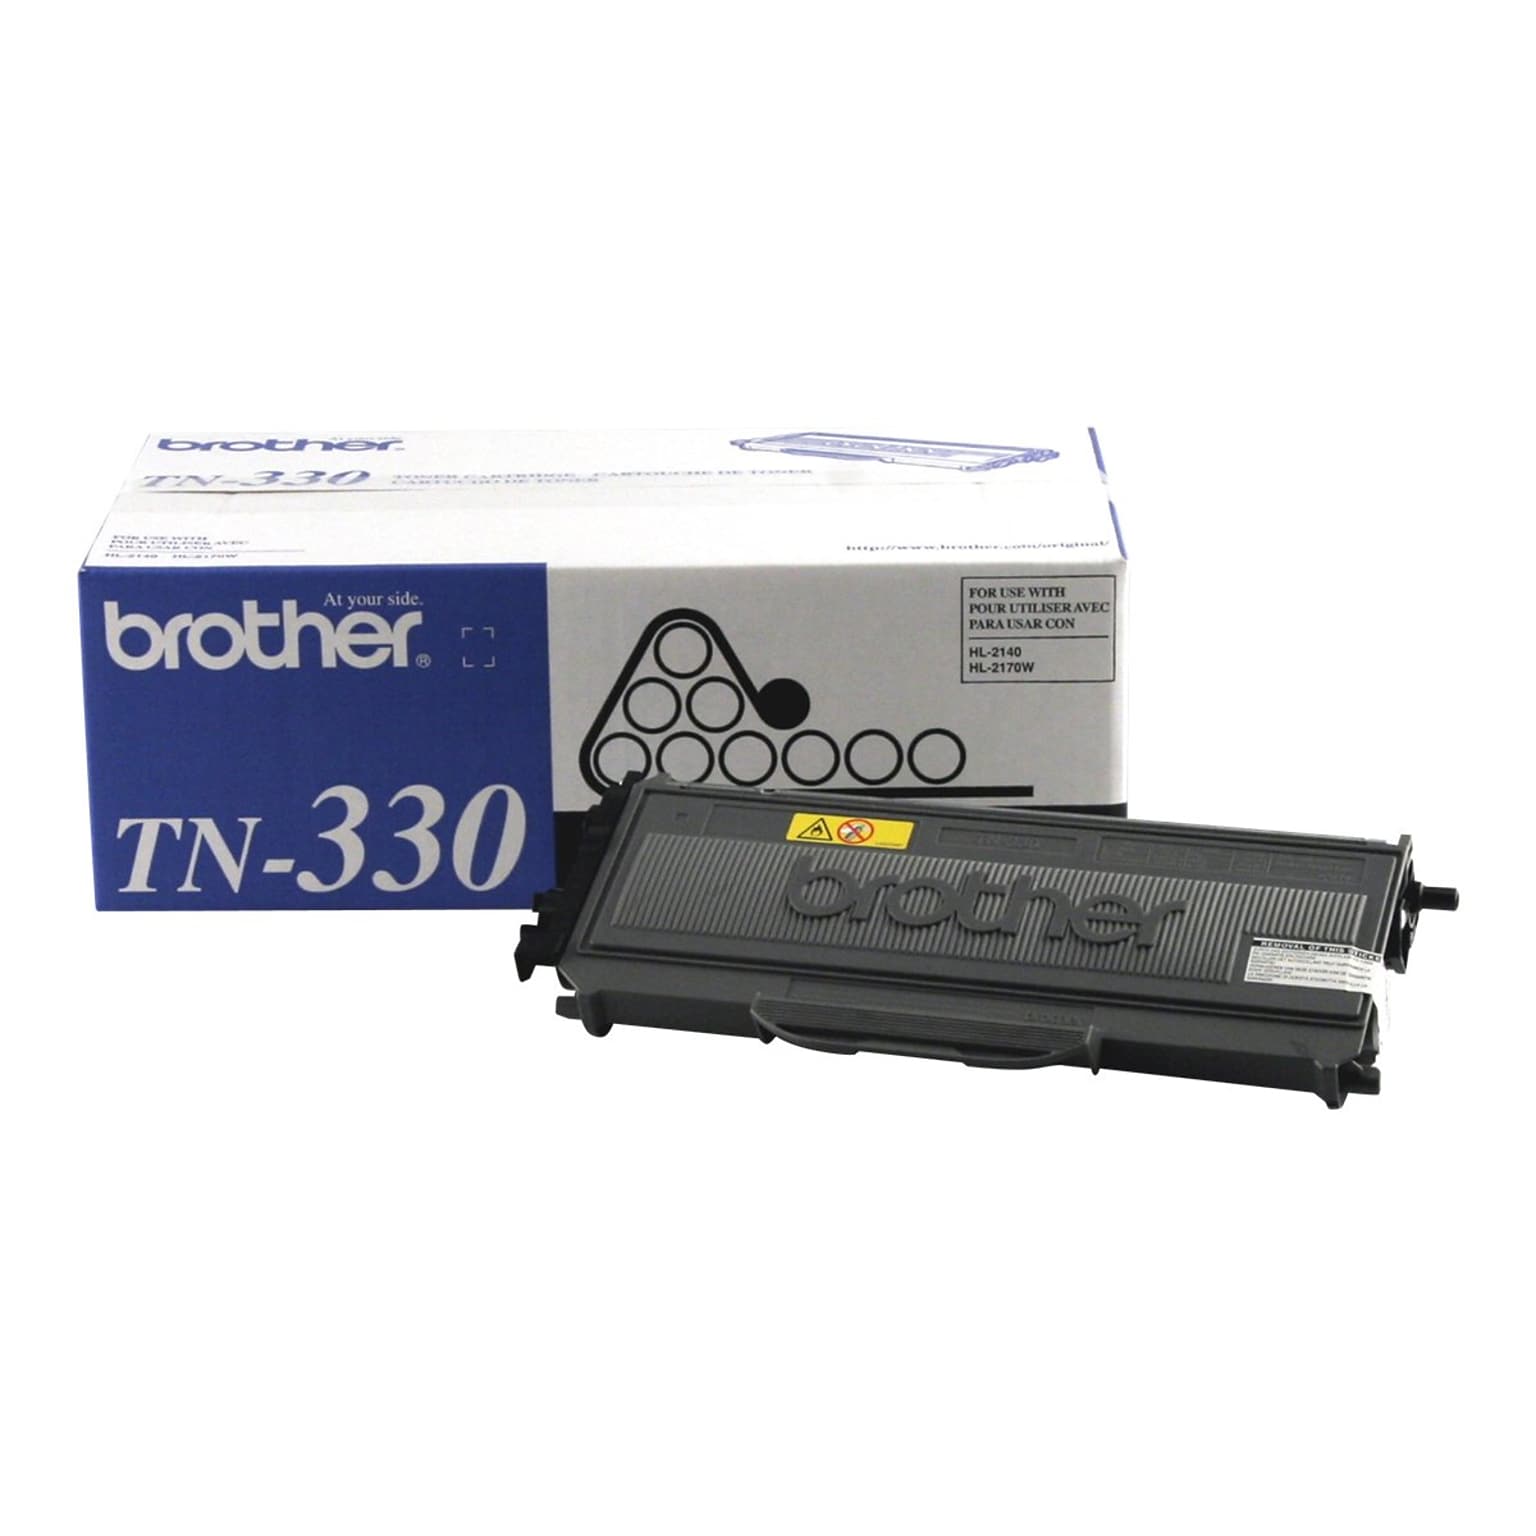 Brother TN-330 Black Standard Toner Cartridge   (BRTTN330)